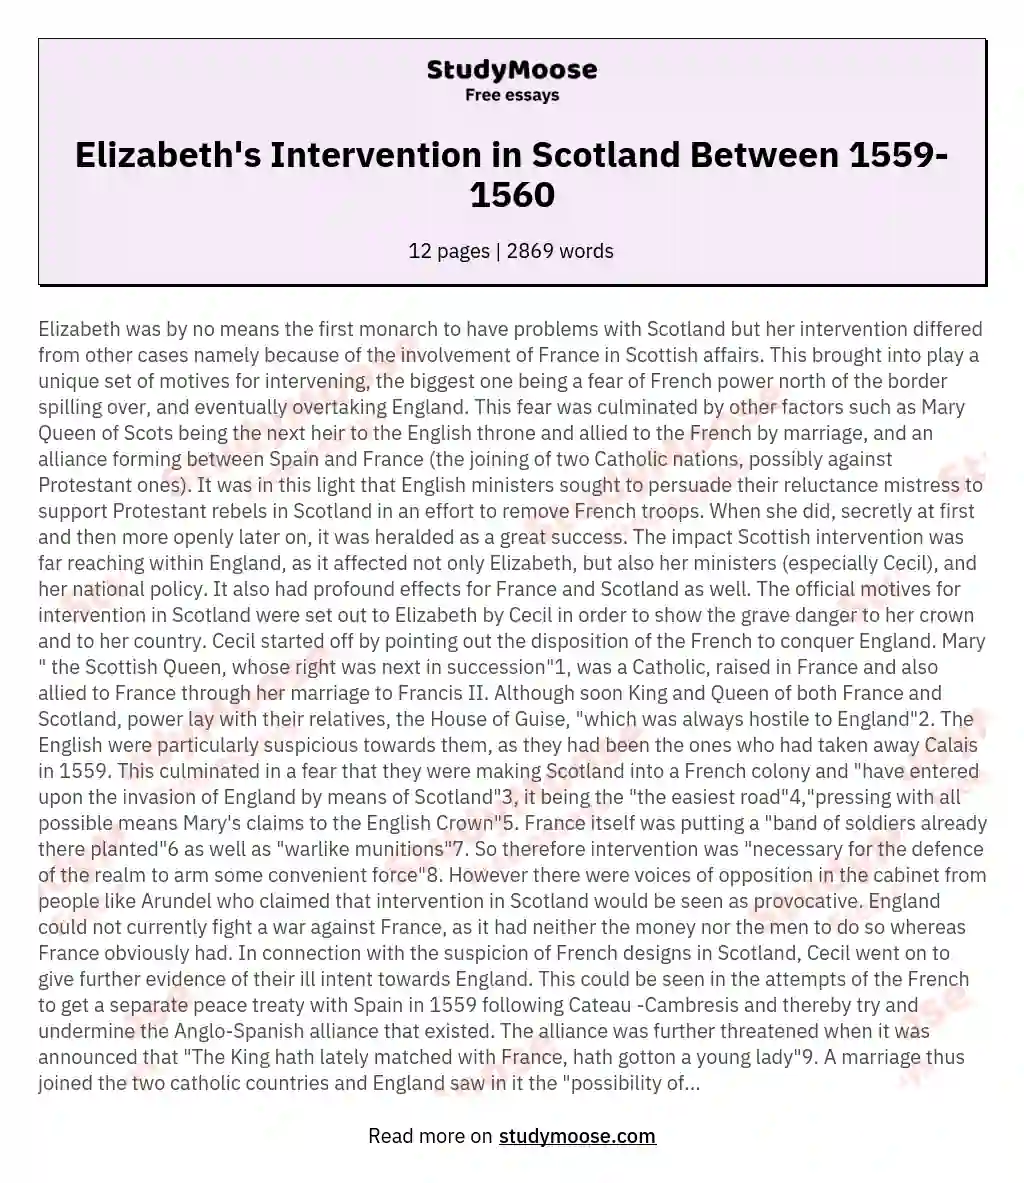 Elizabeth's Intervention in Scotland Between 1559-1560 essay